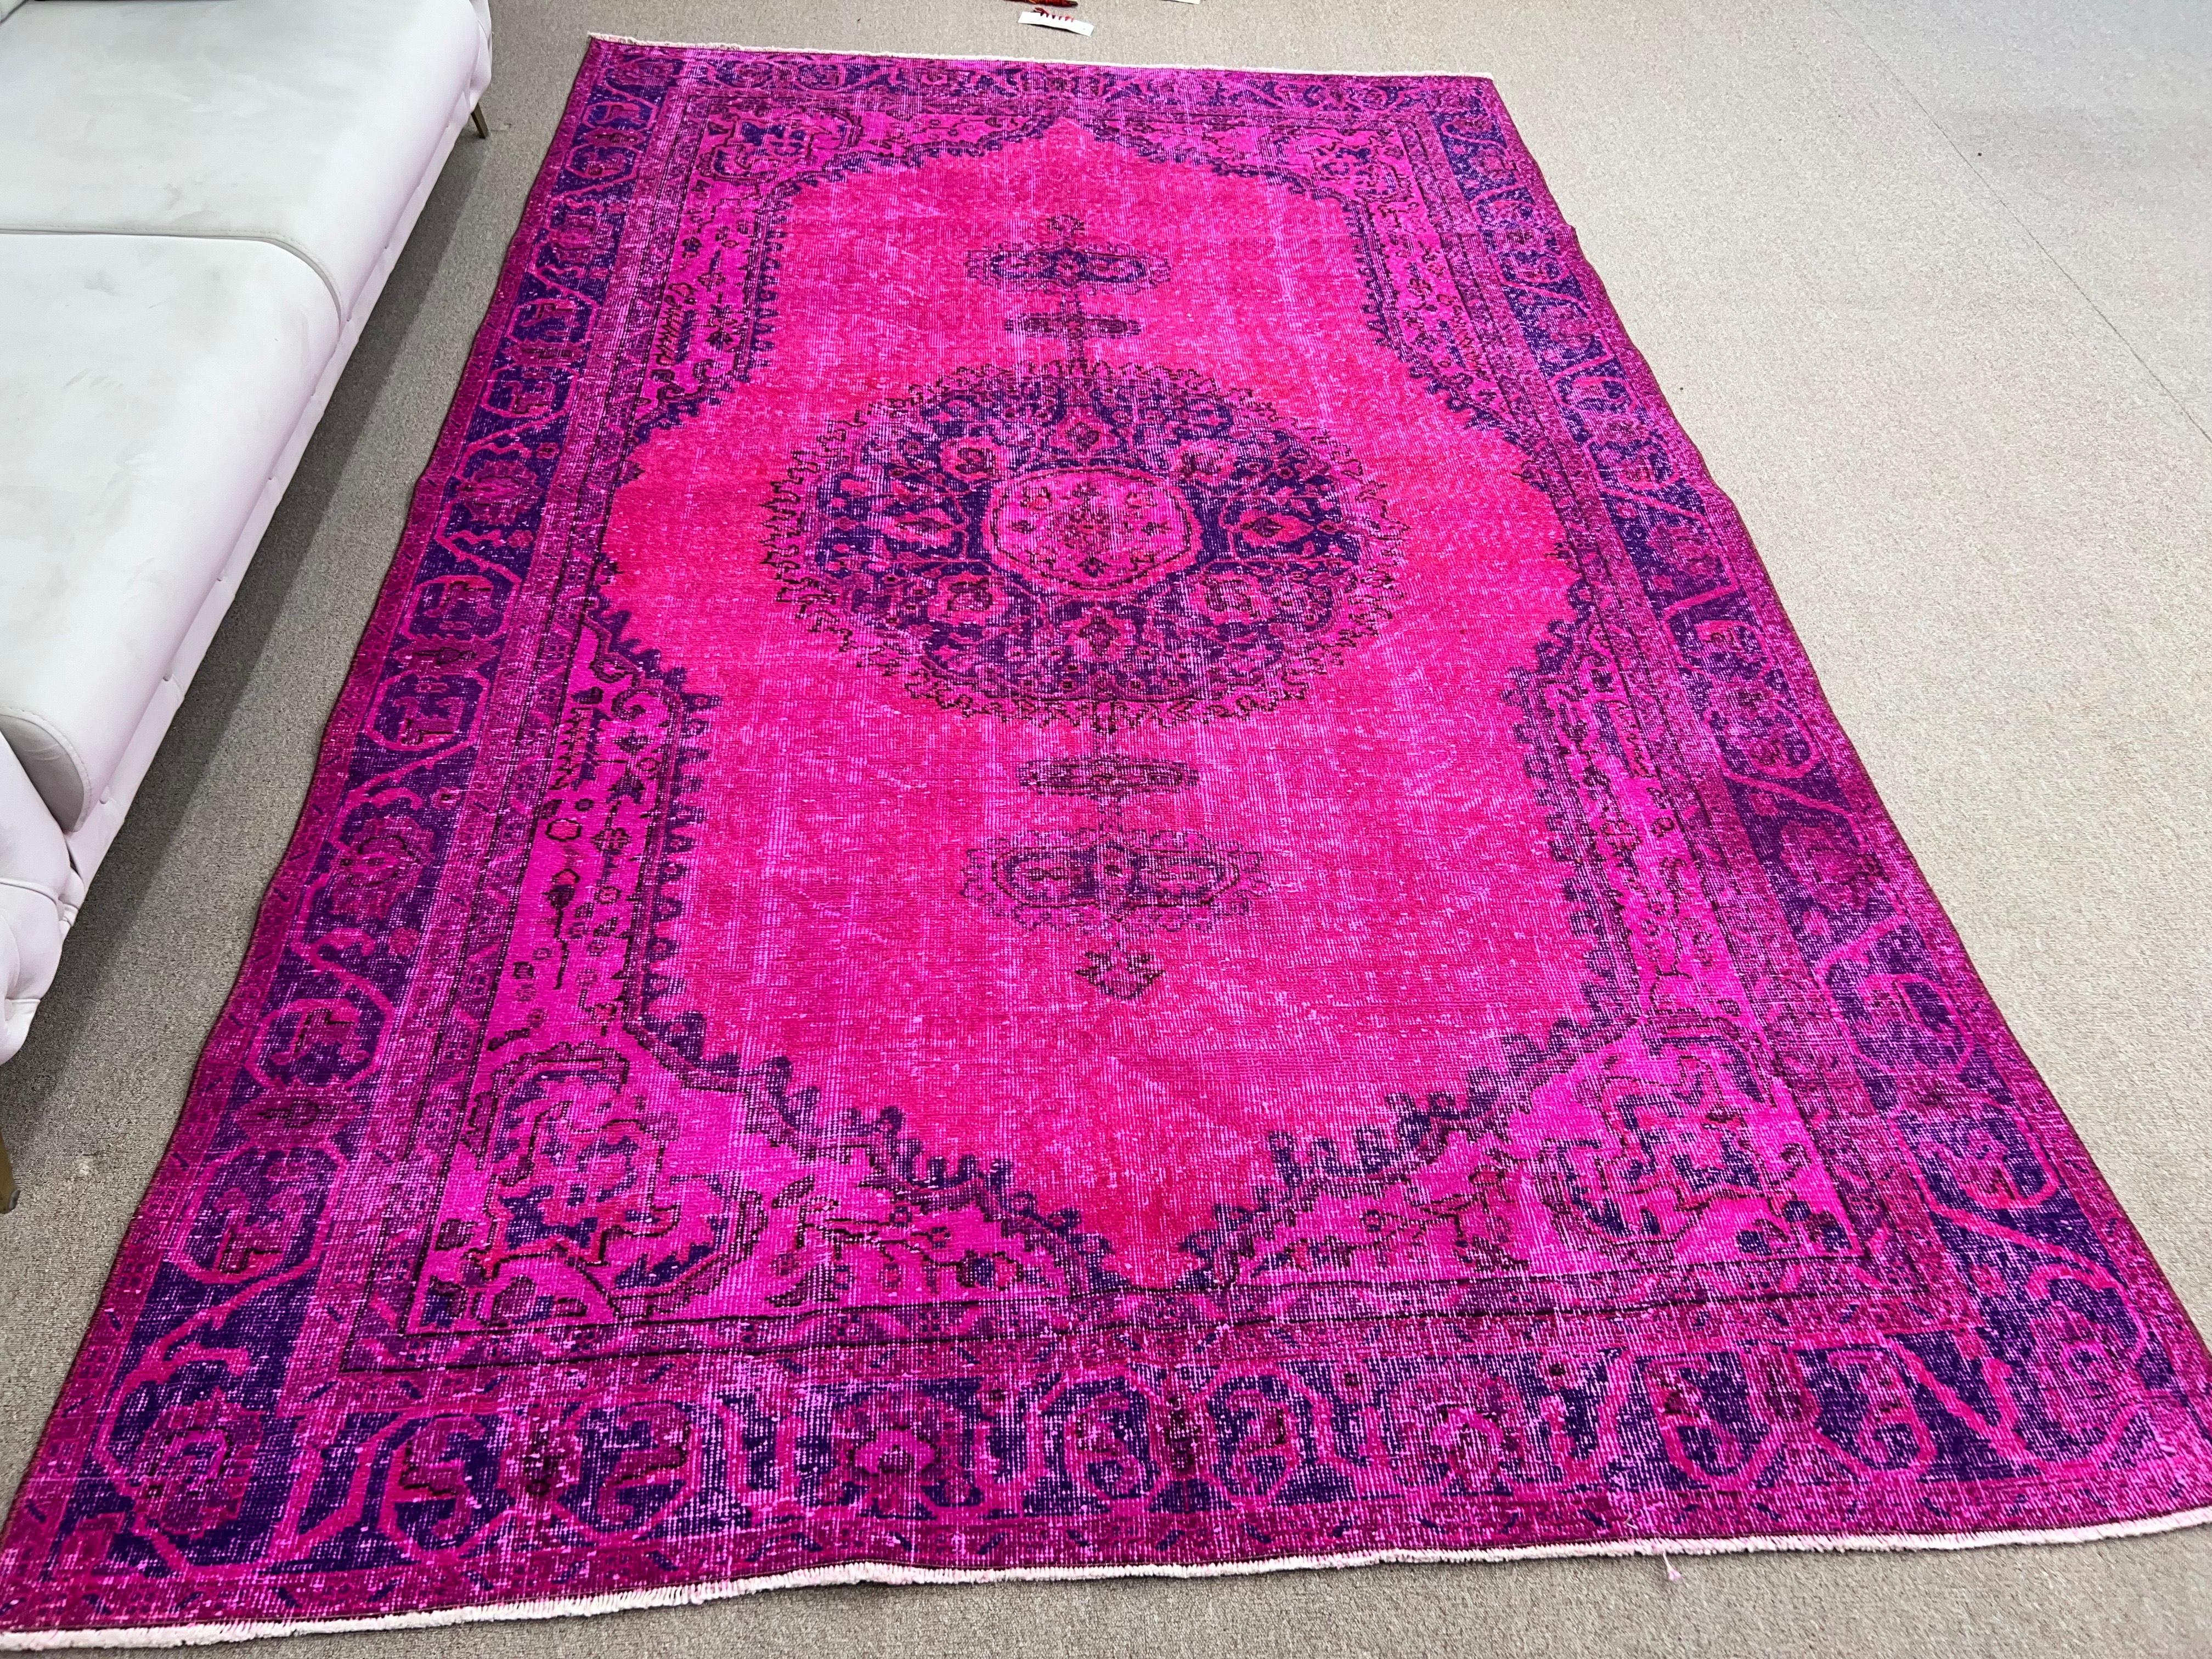 Wool 6.5x10.5 Ft Modern Handmade Turkish Area Rug in Fuchsia Pink. Living Room Carpet For Sale